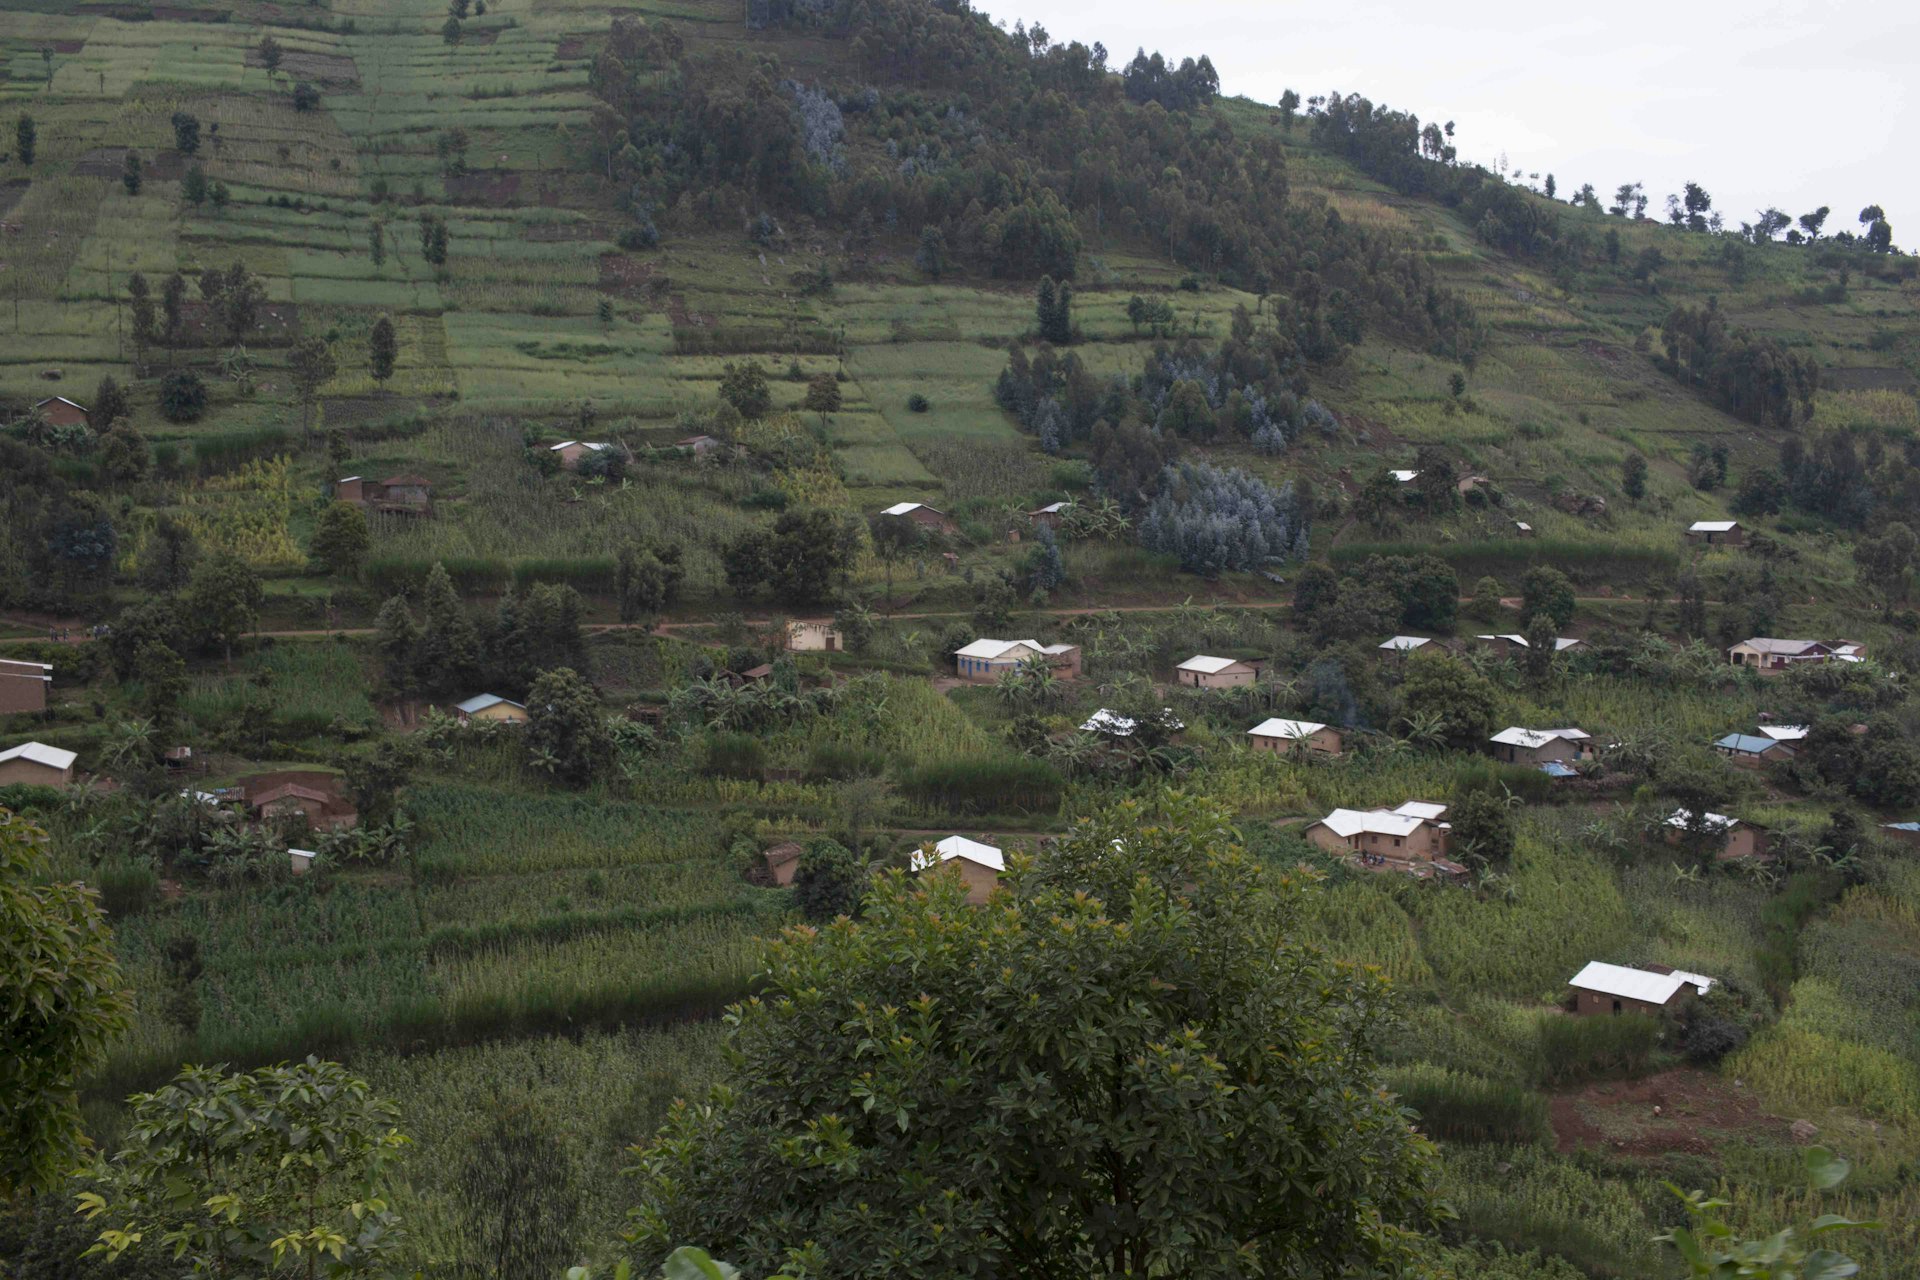 Rural houses on Rwanda's famed rolling hills, Musanze province